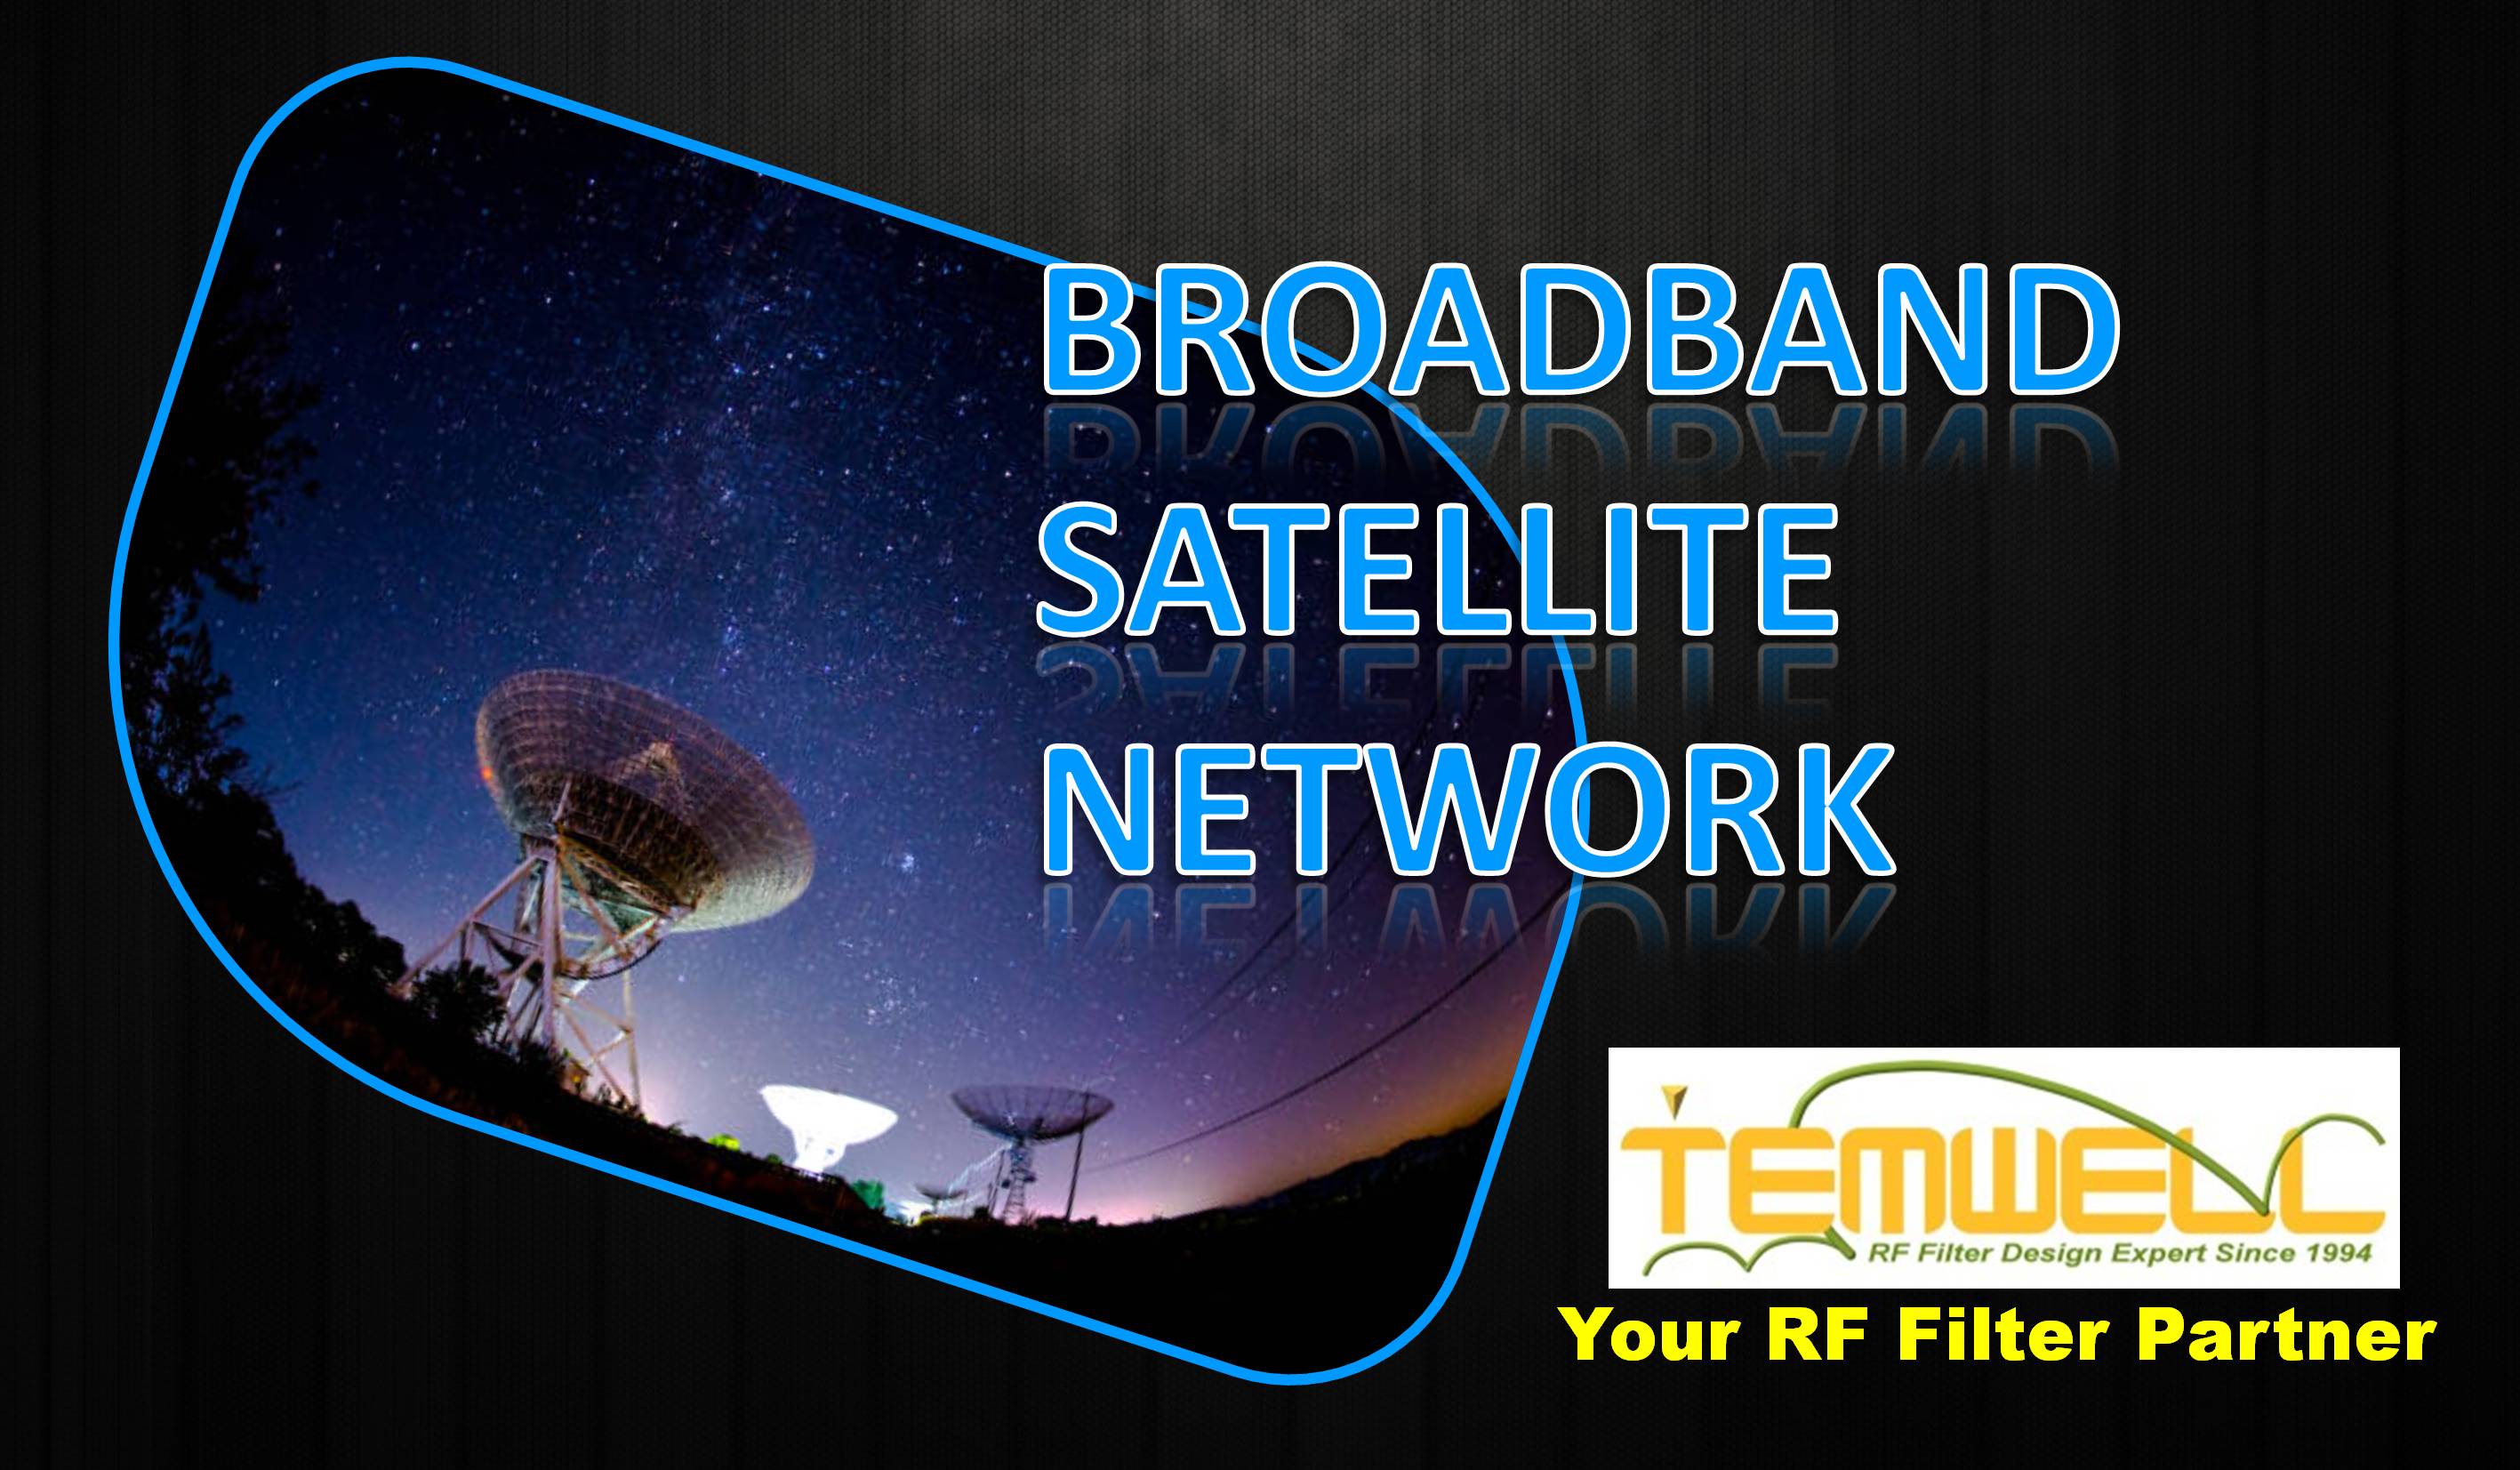 proimages/featured/k-band-broadband-satellite-network/k-band-broadband-satellite-network5.jpg